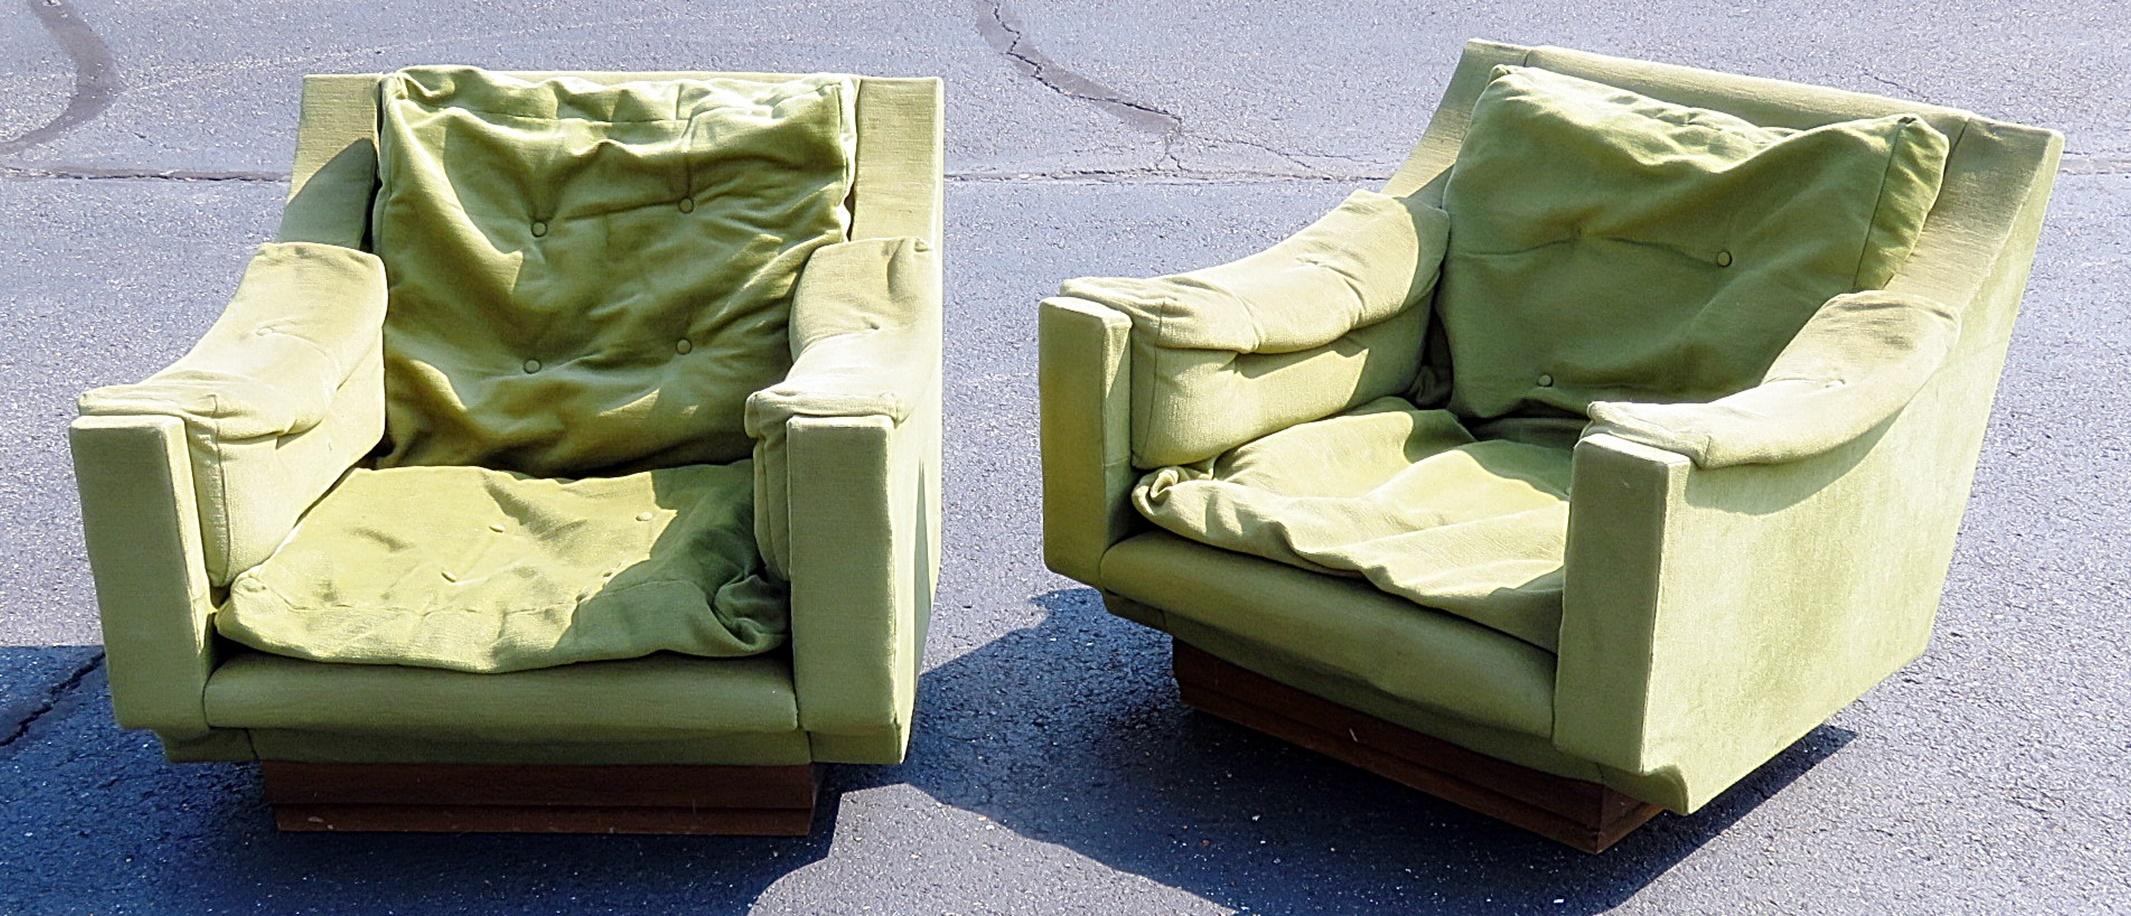 Pair of Italian Mid-Century Modern lounge chairs.